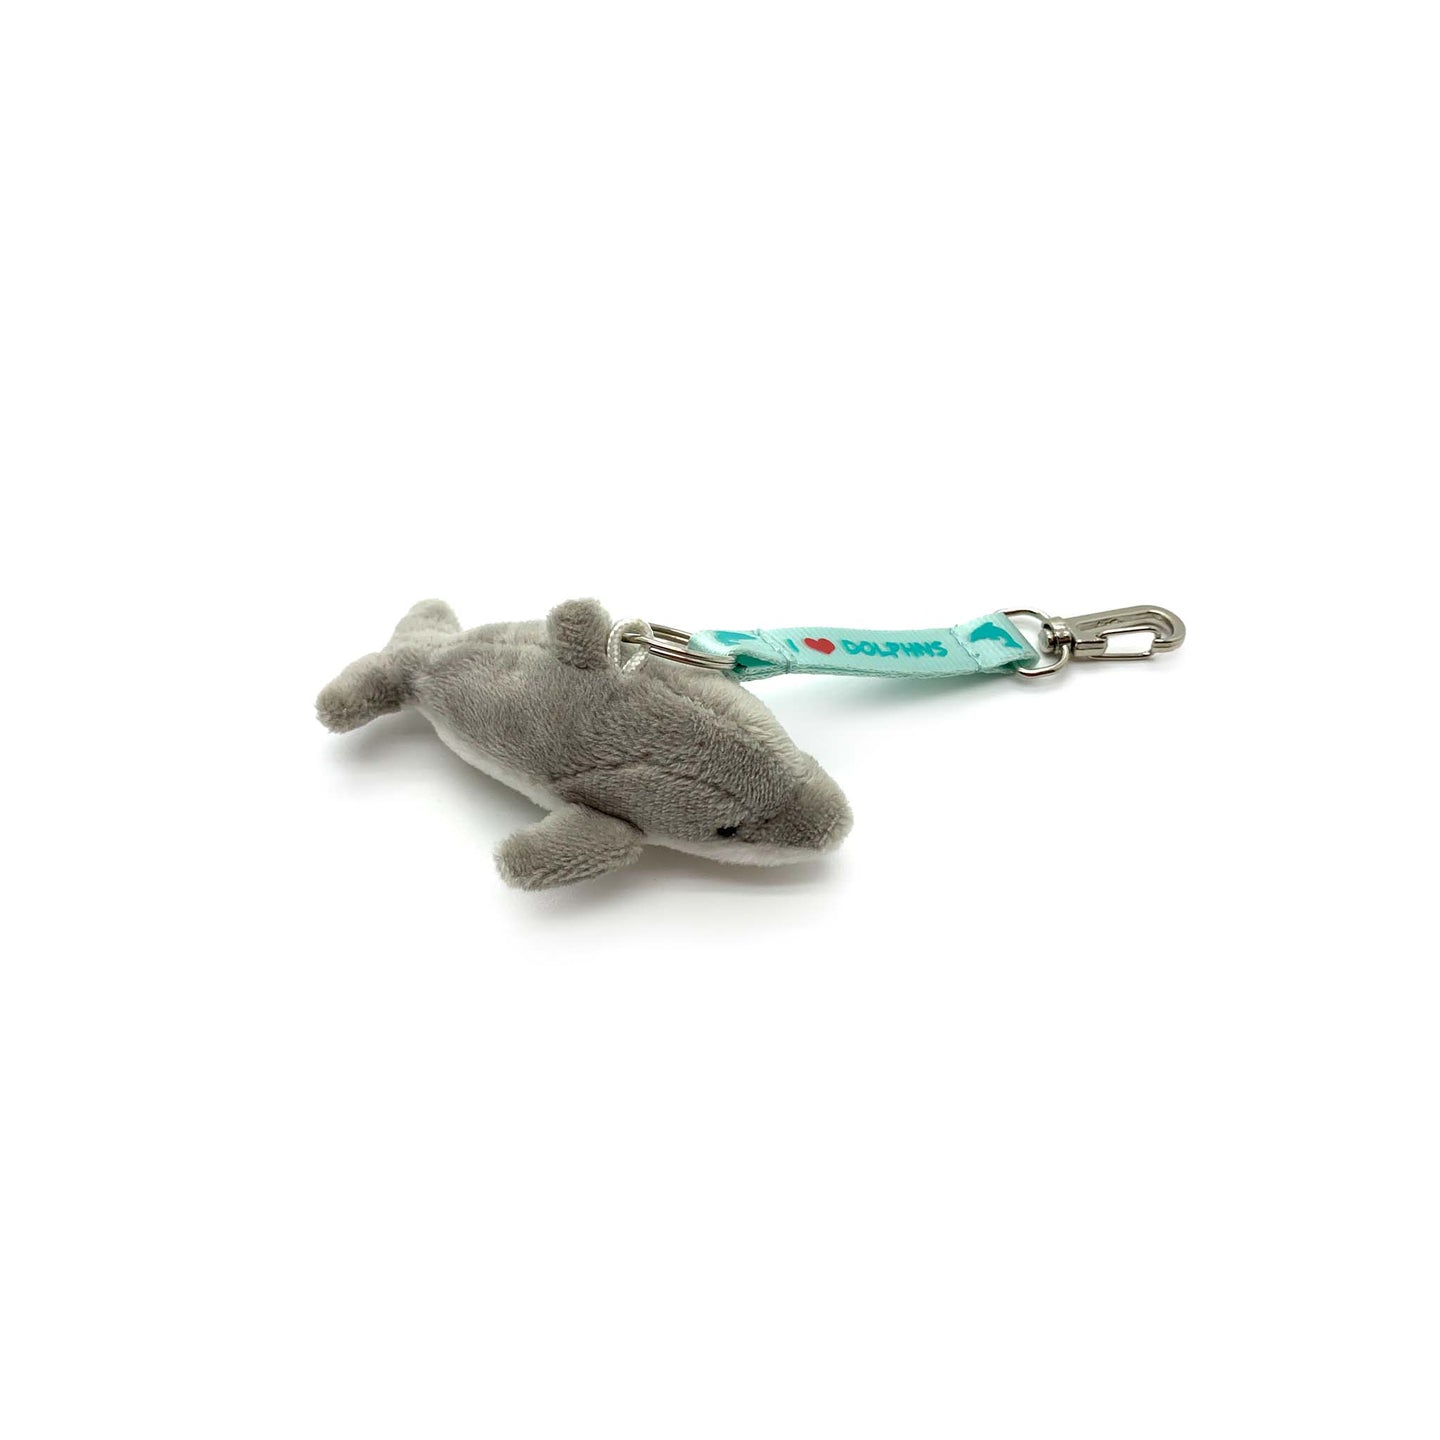 Dolphin Discovery: “Dart” Dolphin Keychain Plushie